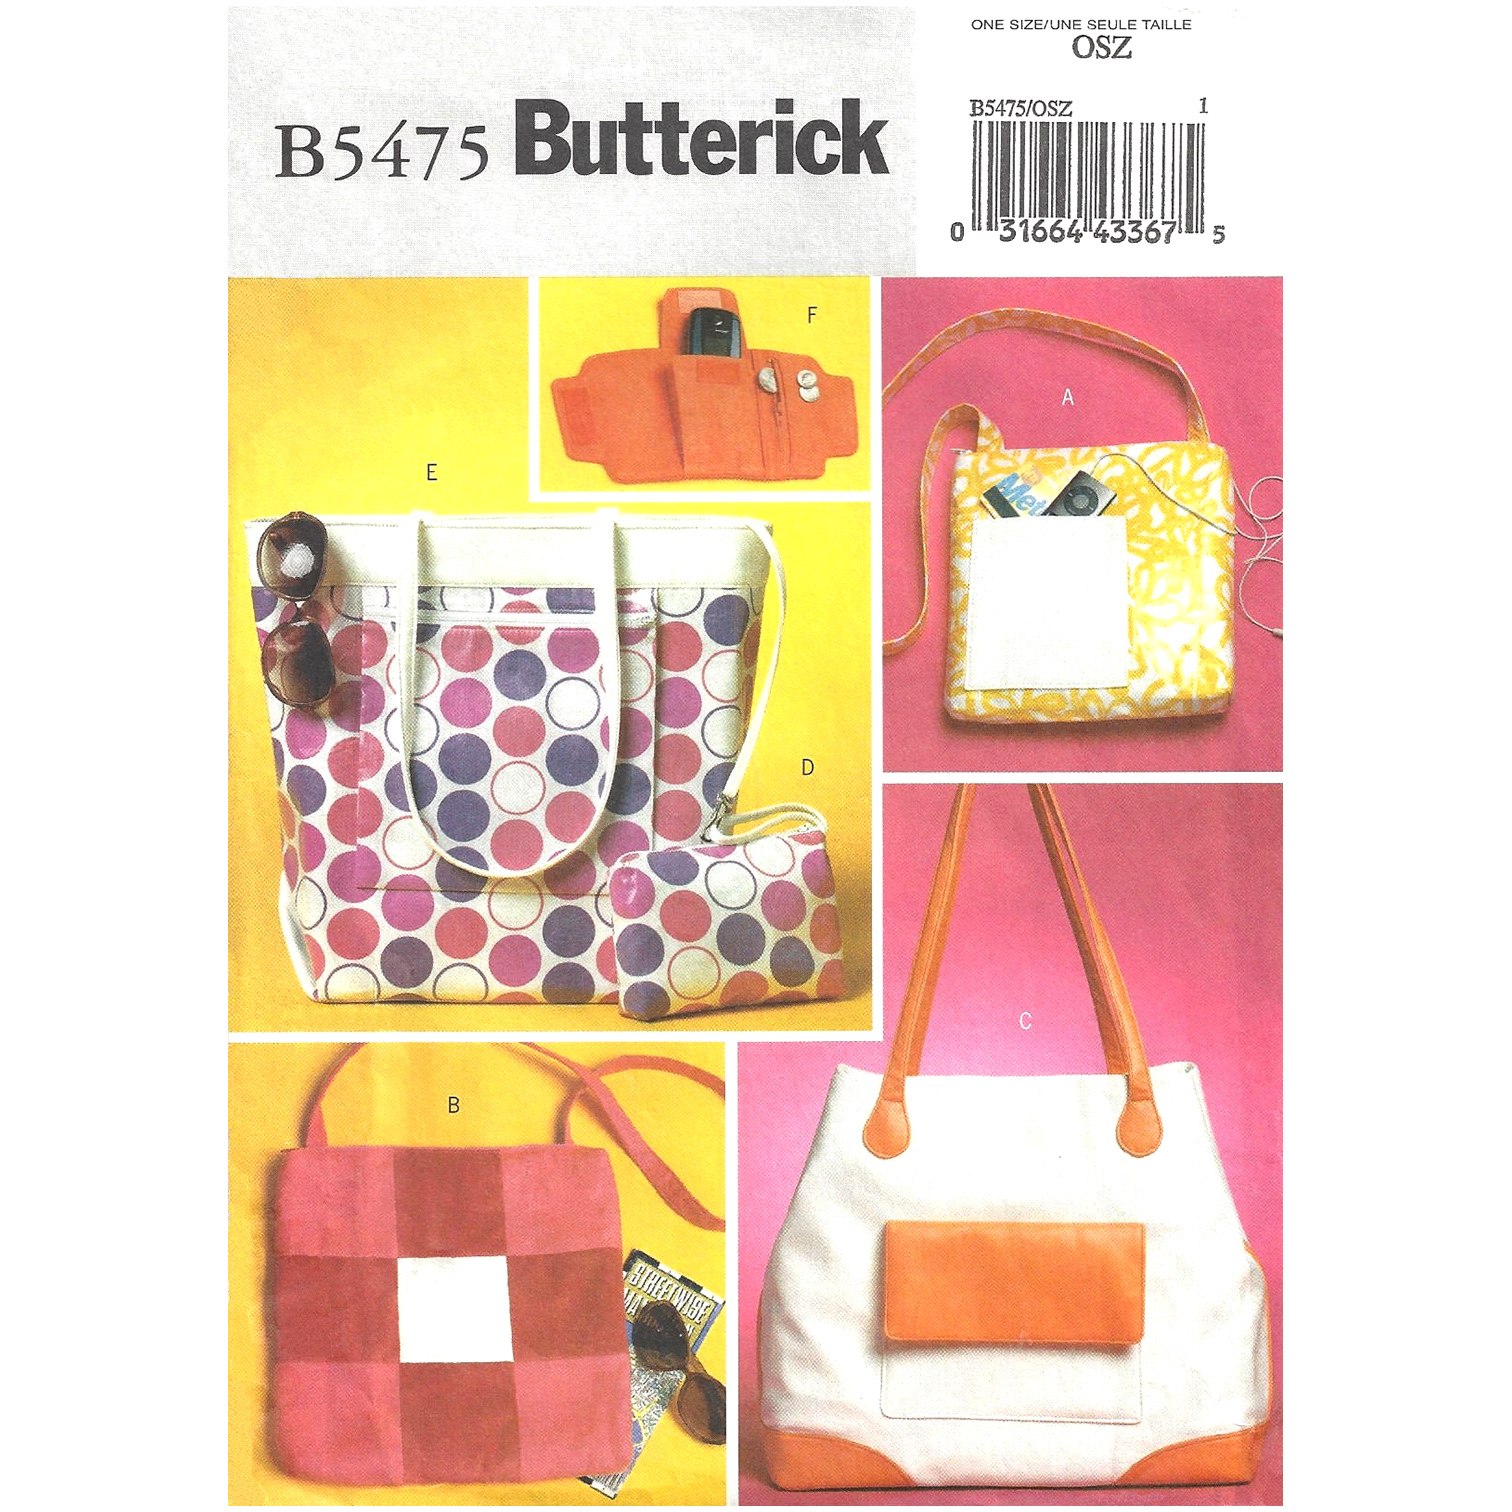 Butterick 5475 bag sewing pattern